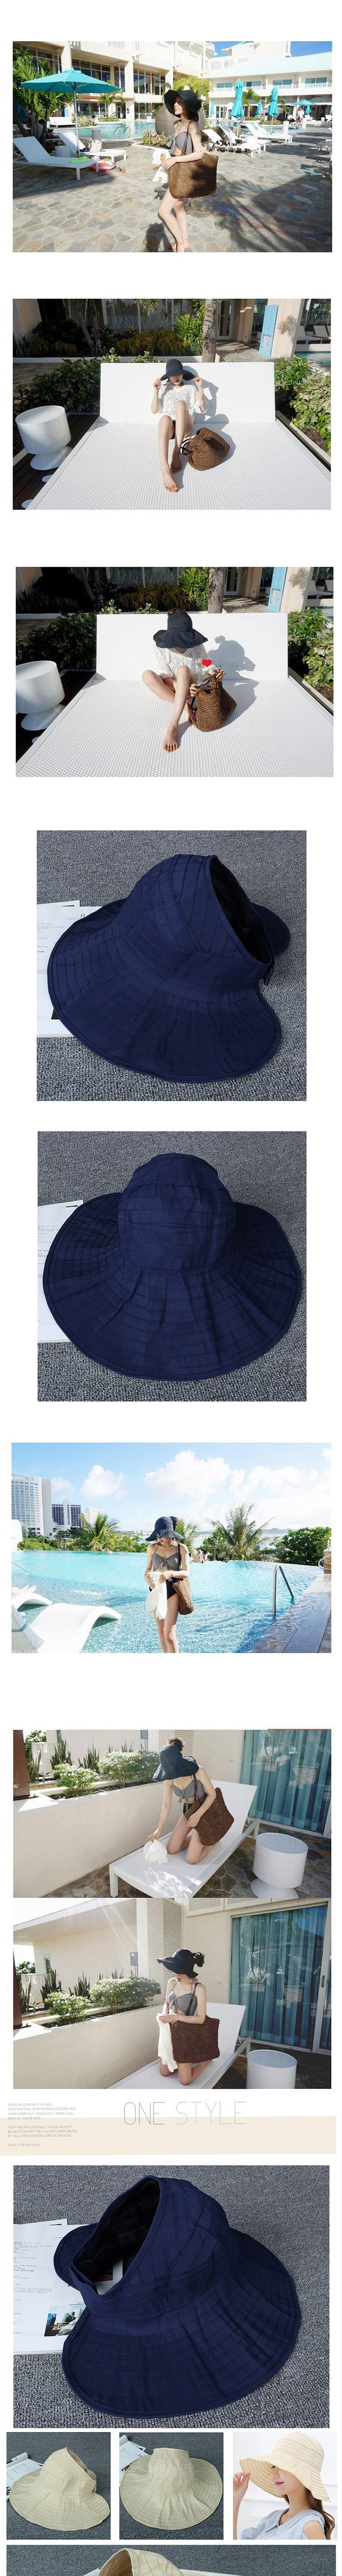 RD-503-Summer-Womens-Outdoor-Sun-Protection-Folding-Big-Empty-Top-Beach-Hat-1305192